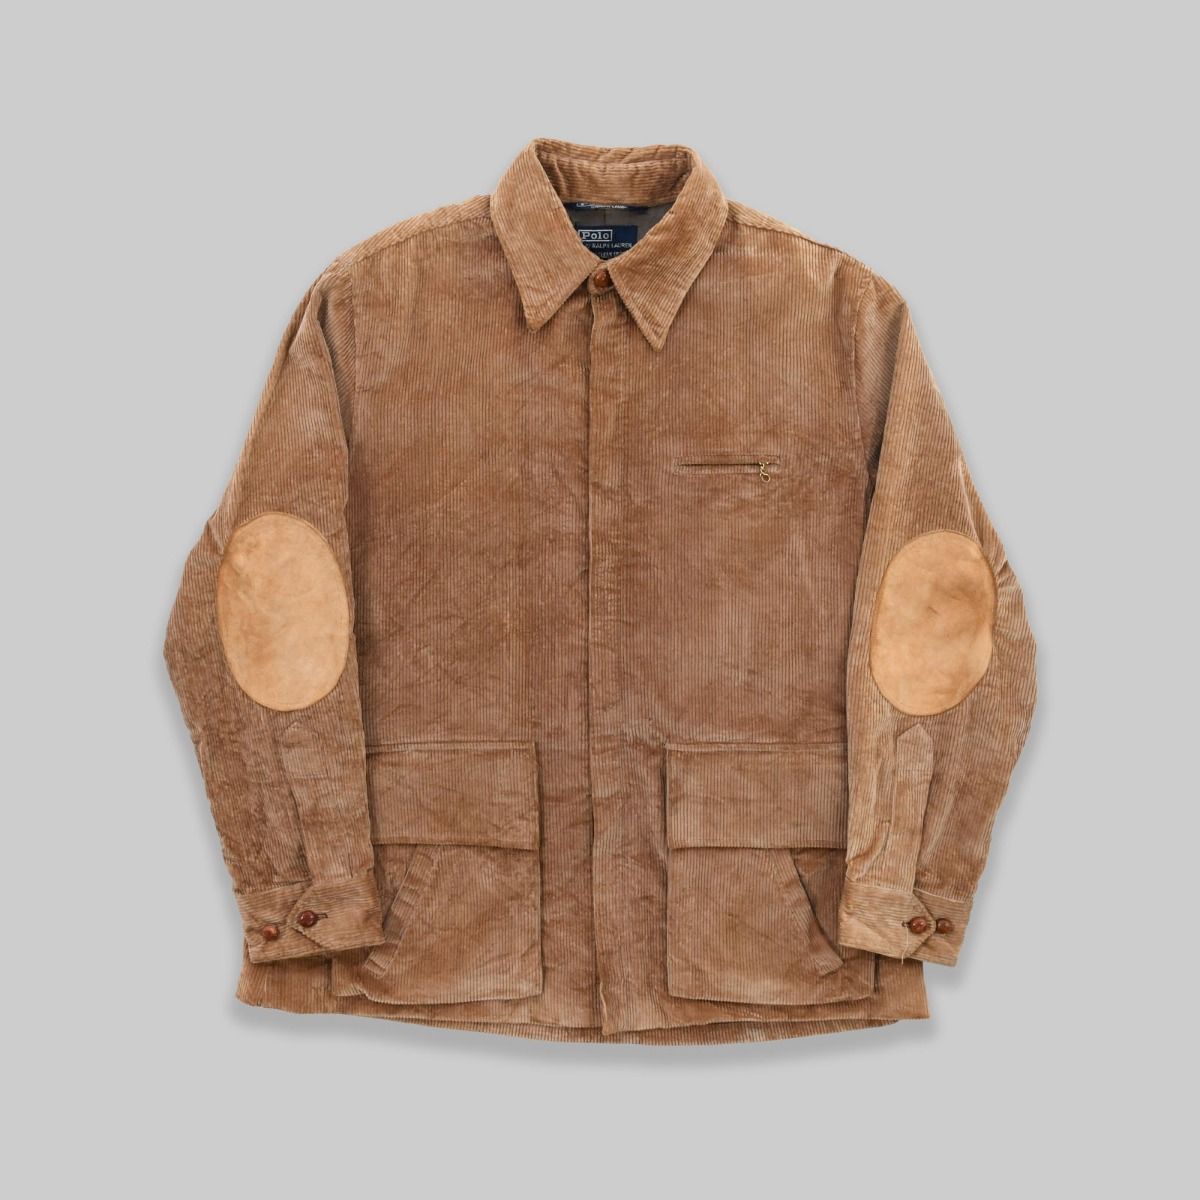  Polo Ralph Lauren 1980s Corduroy Jacket